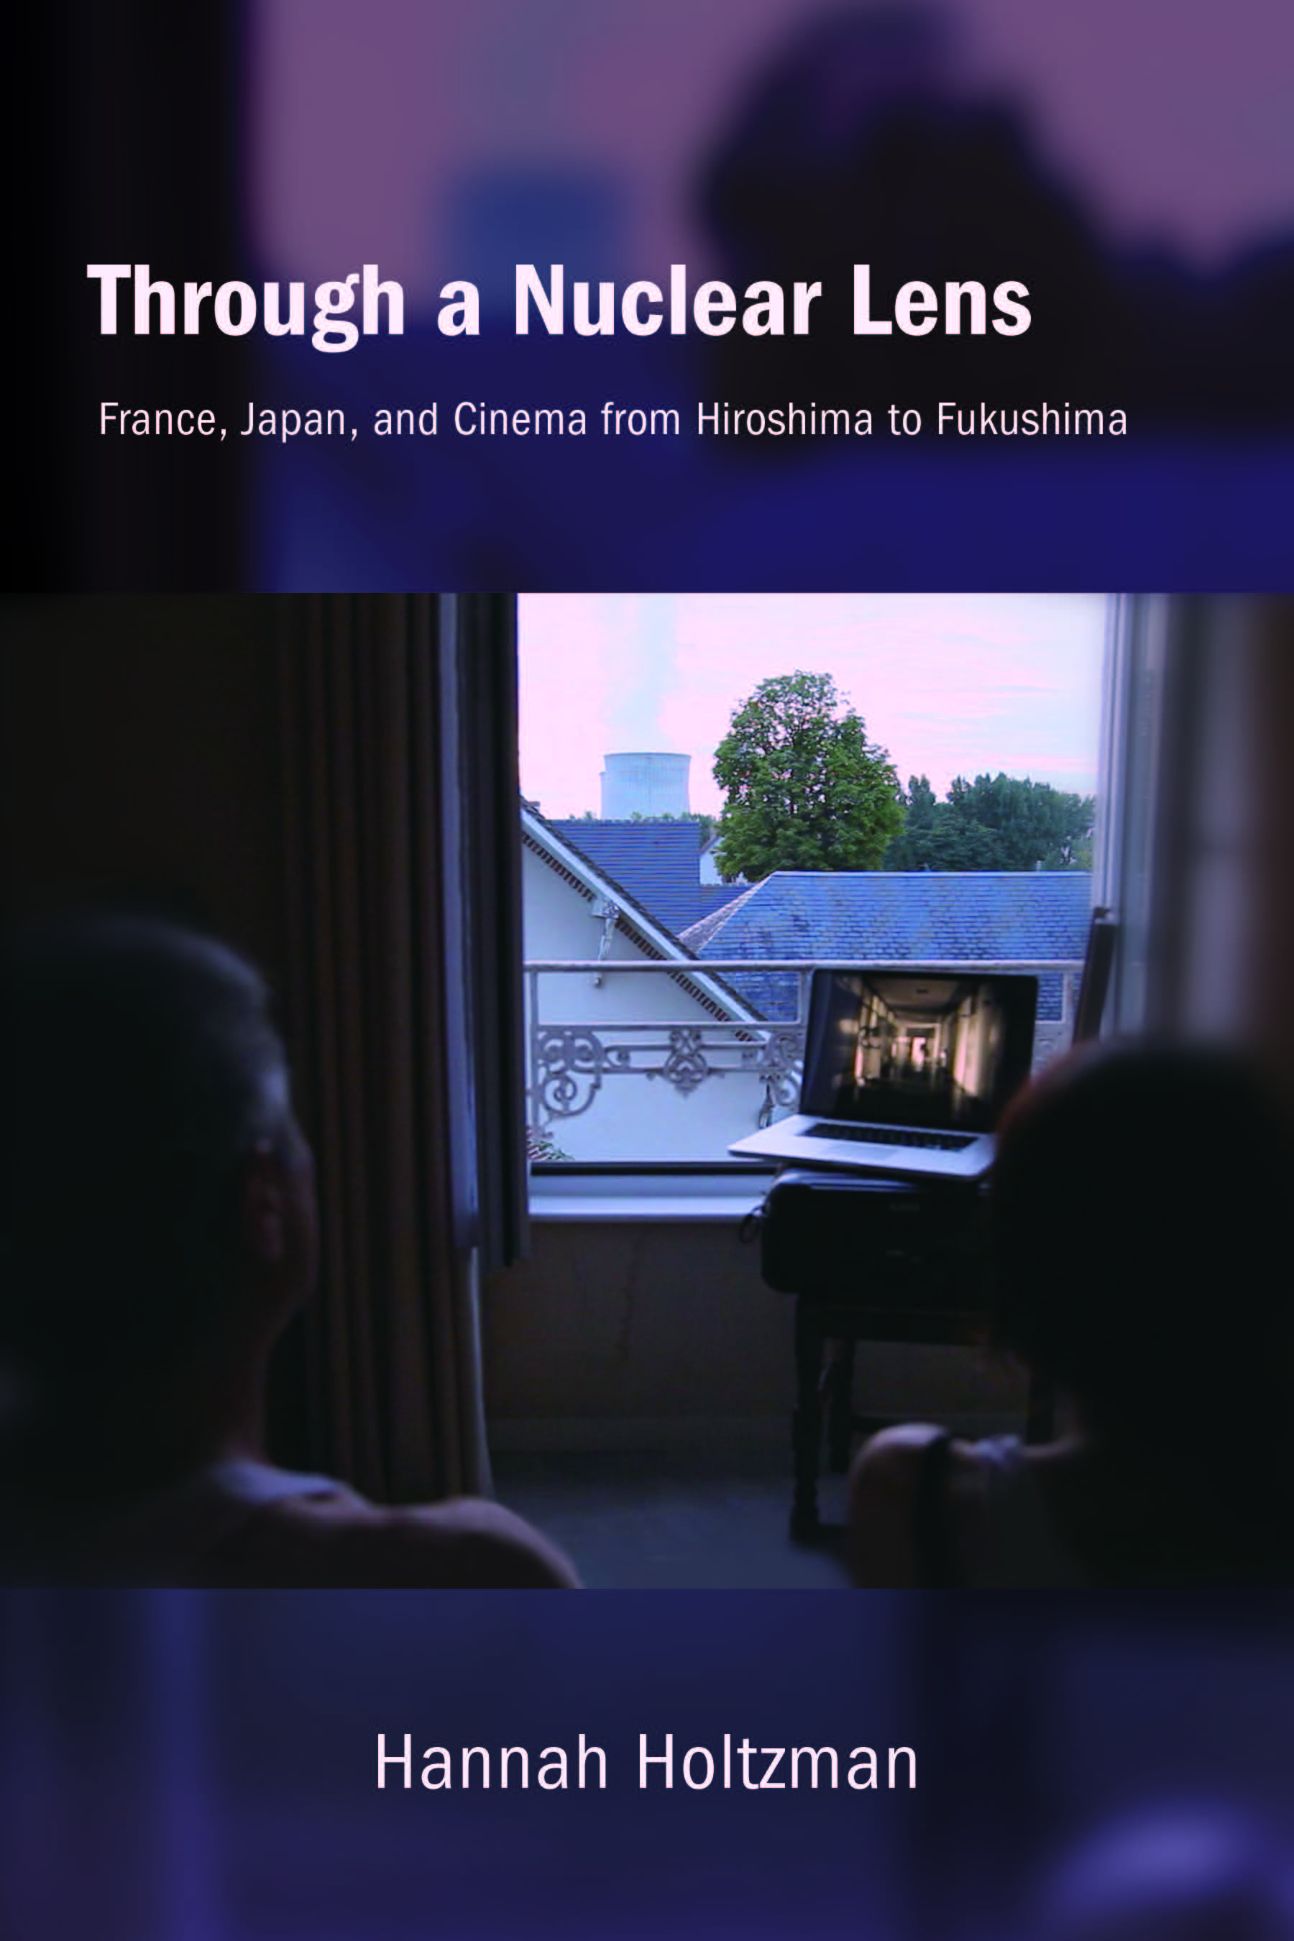 Hannah Holtzman, Through a Nuclear Lens. France, Japan, and Cinema from Hiroshima to Fukushima